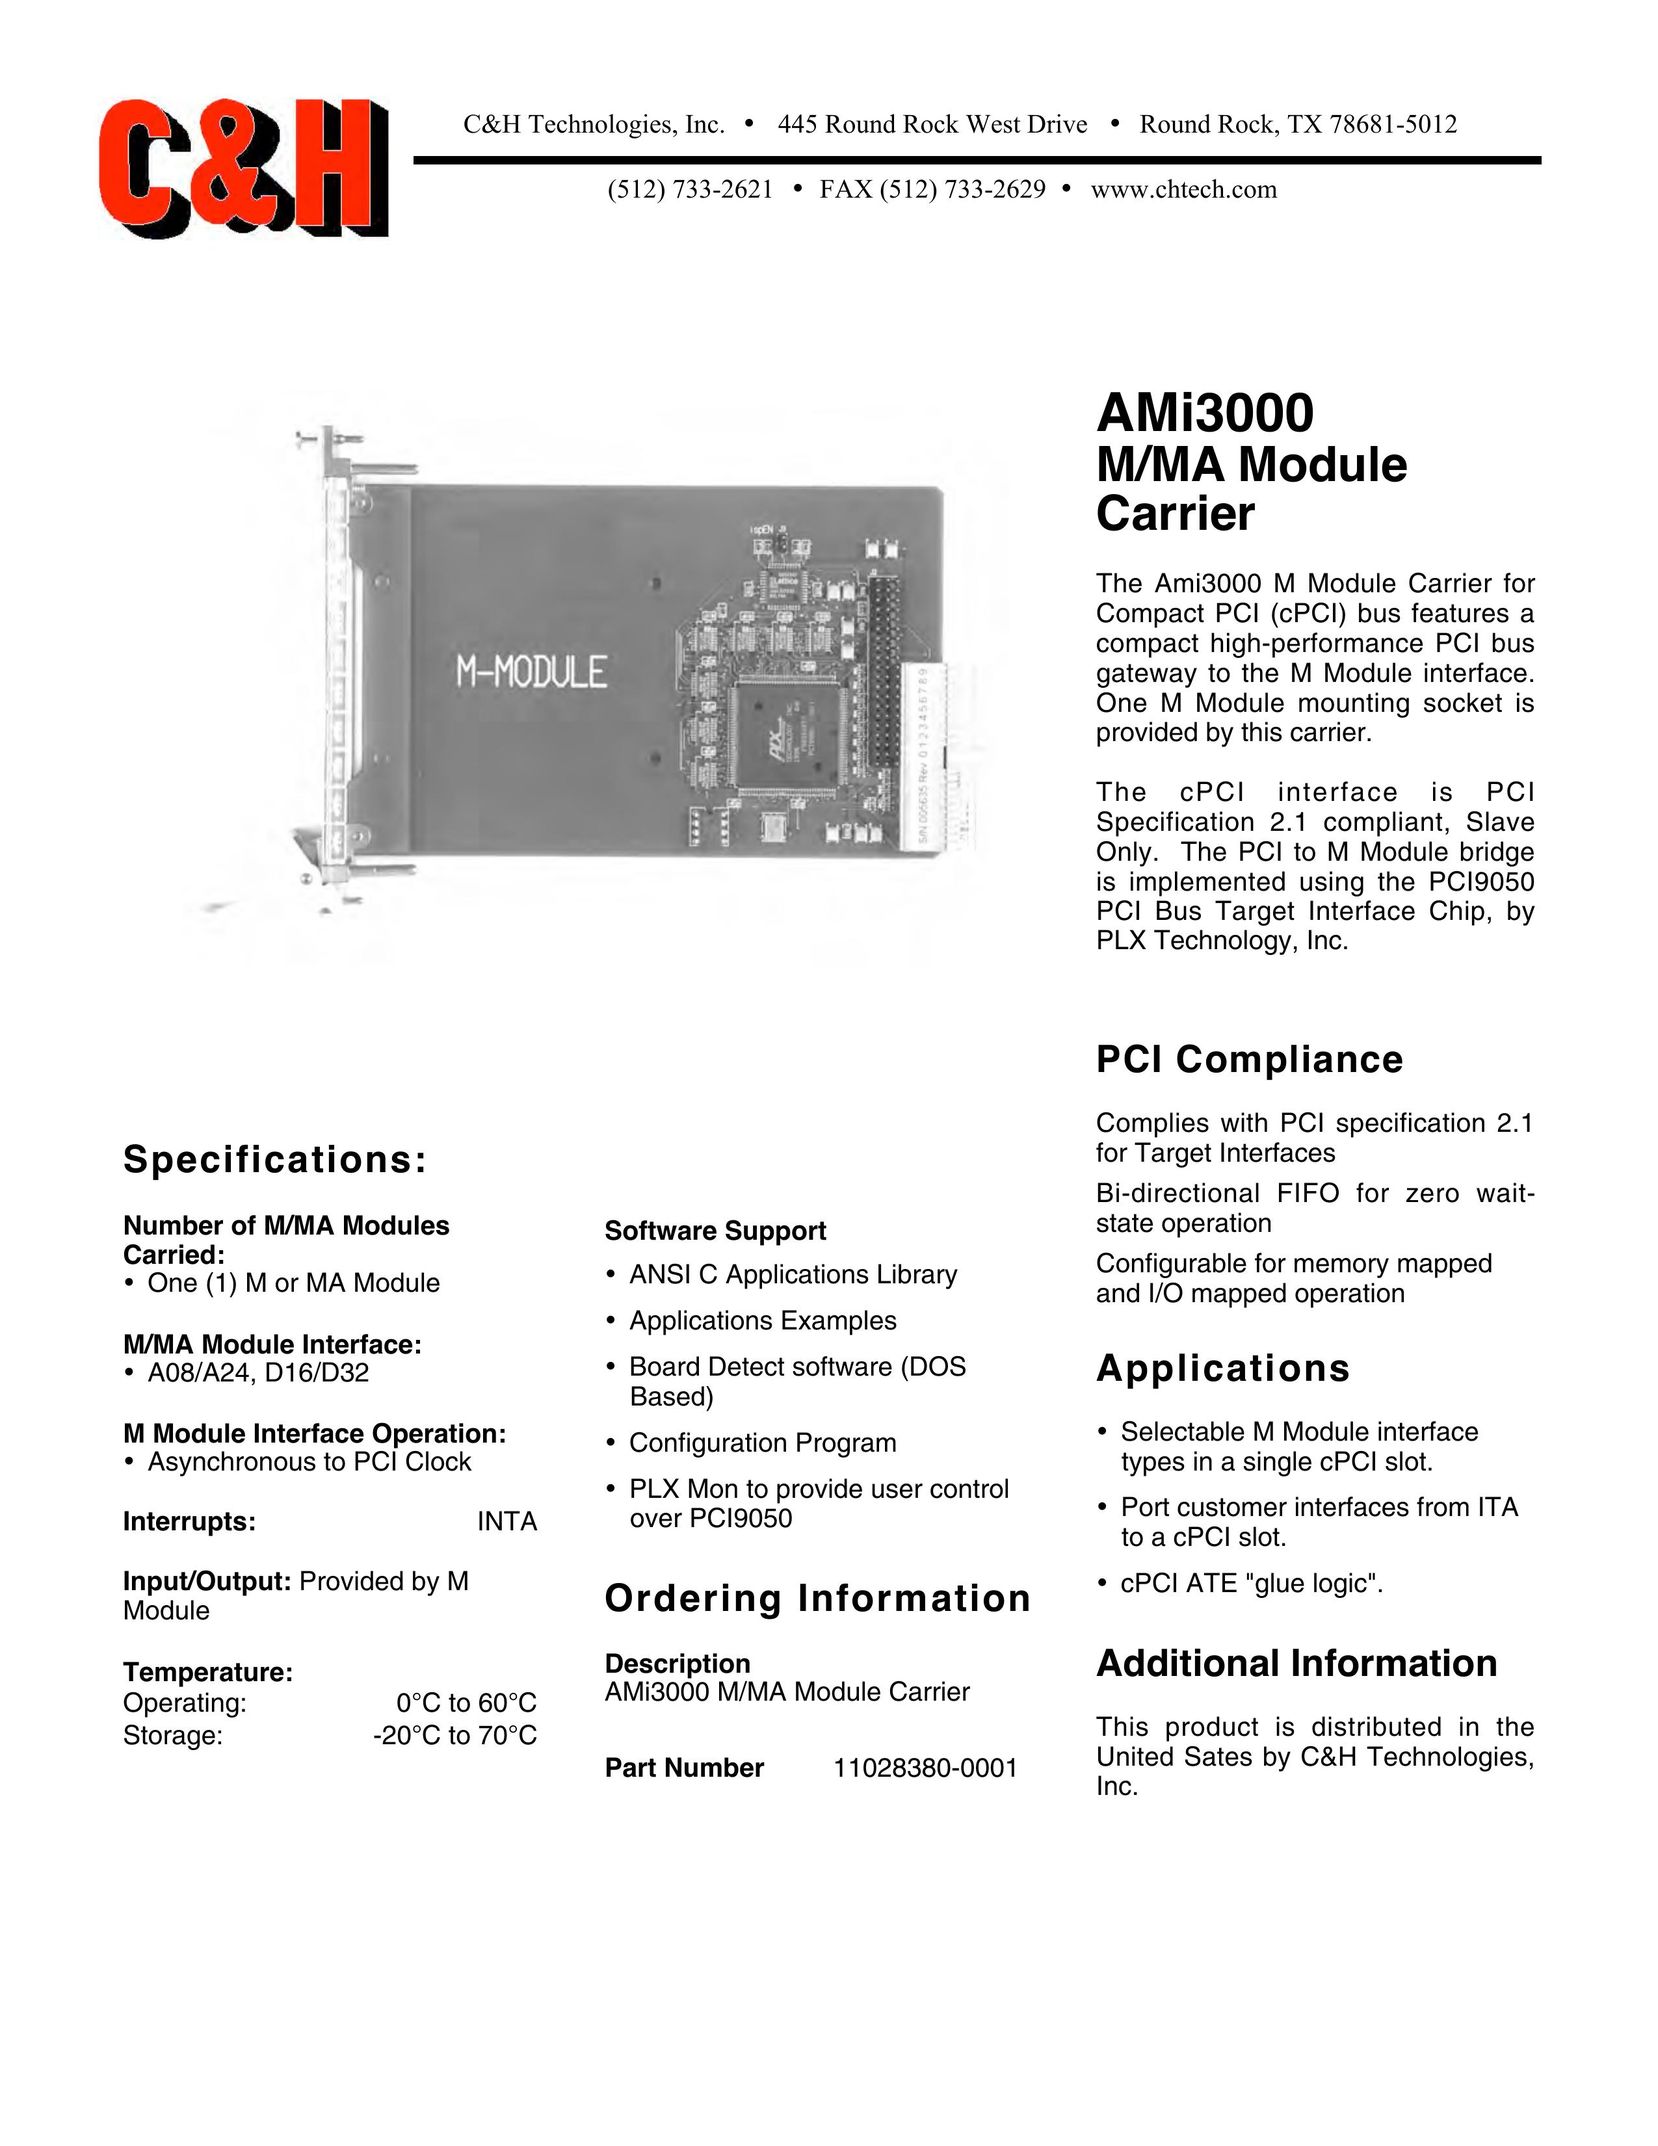 CH Tech AMi3000 Network Card User Manual